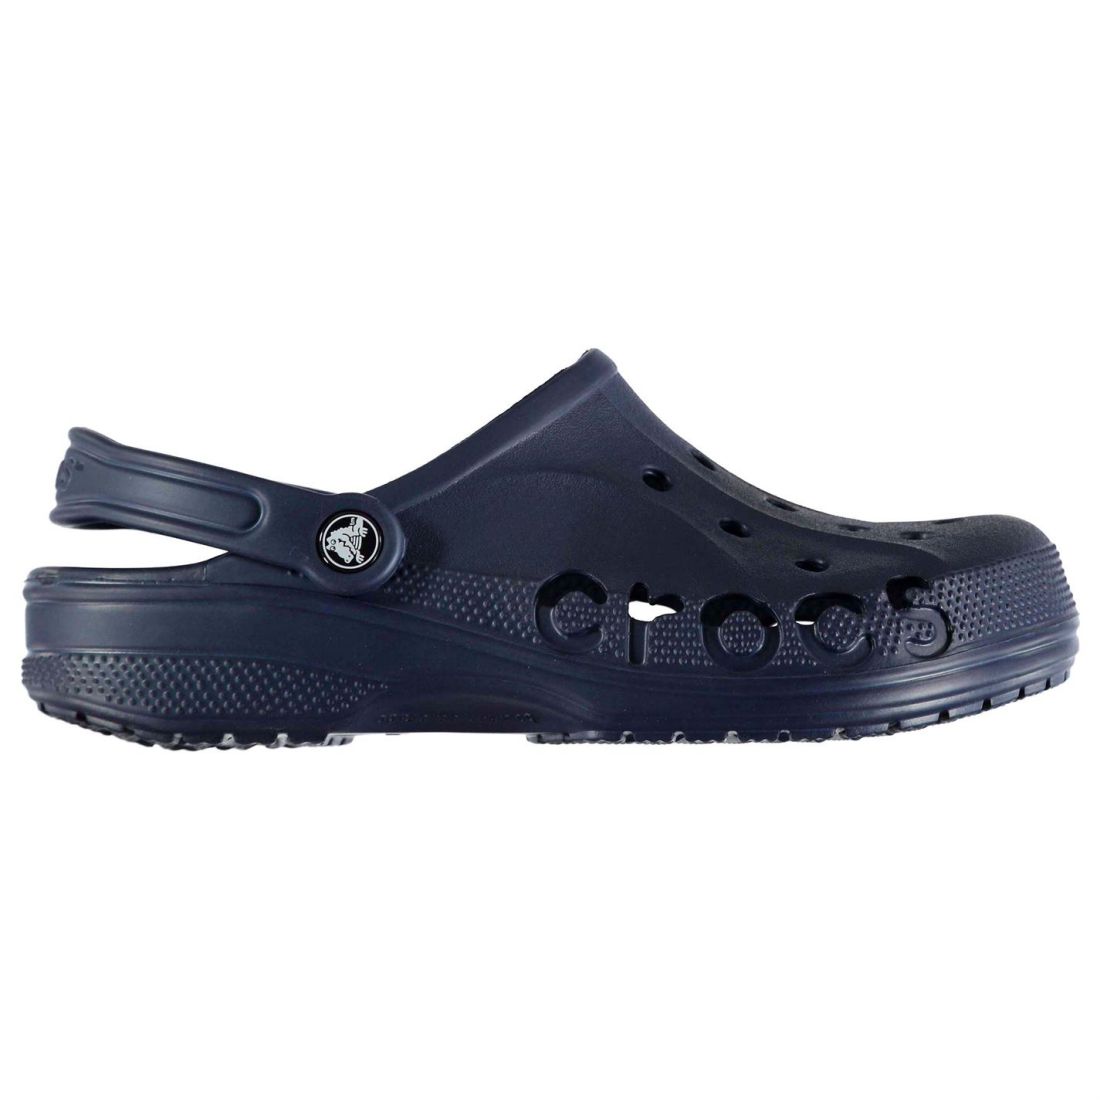 Crocs Mens Gents Baya Clogs Shoes Garden Beach Hospital Casual Footwear ...